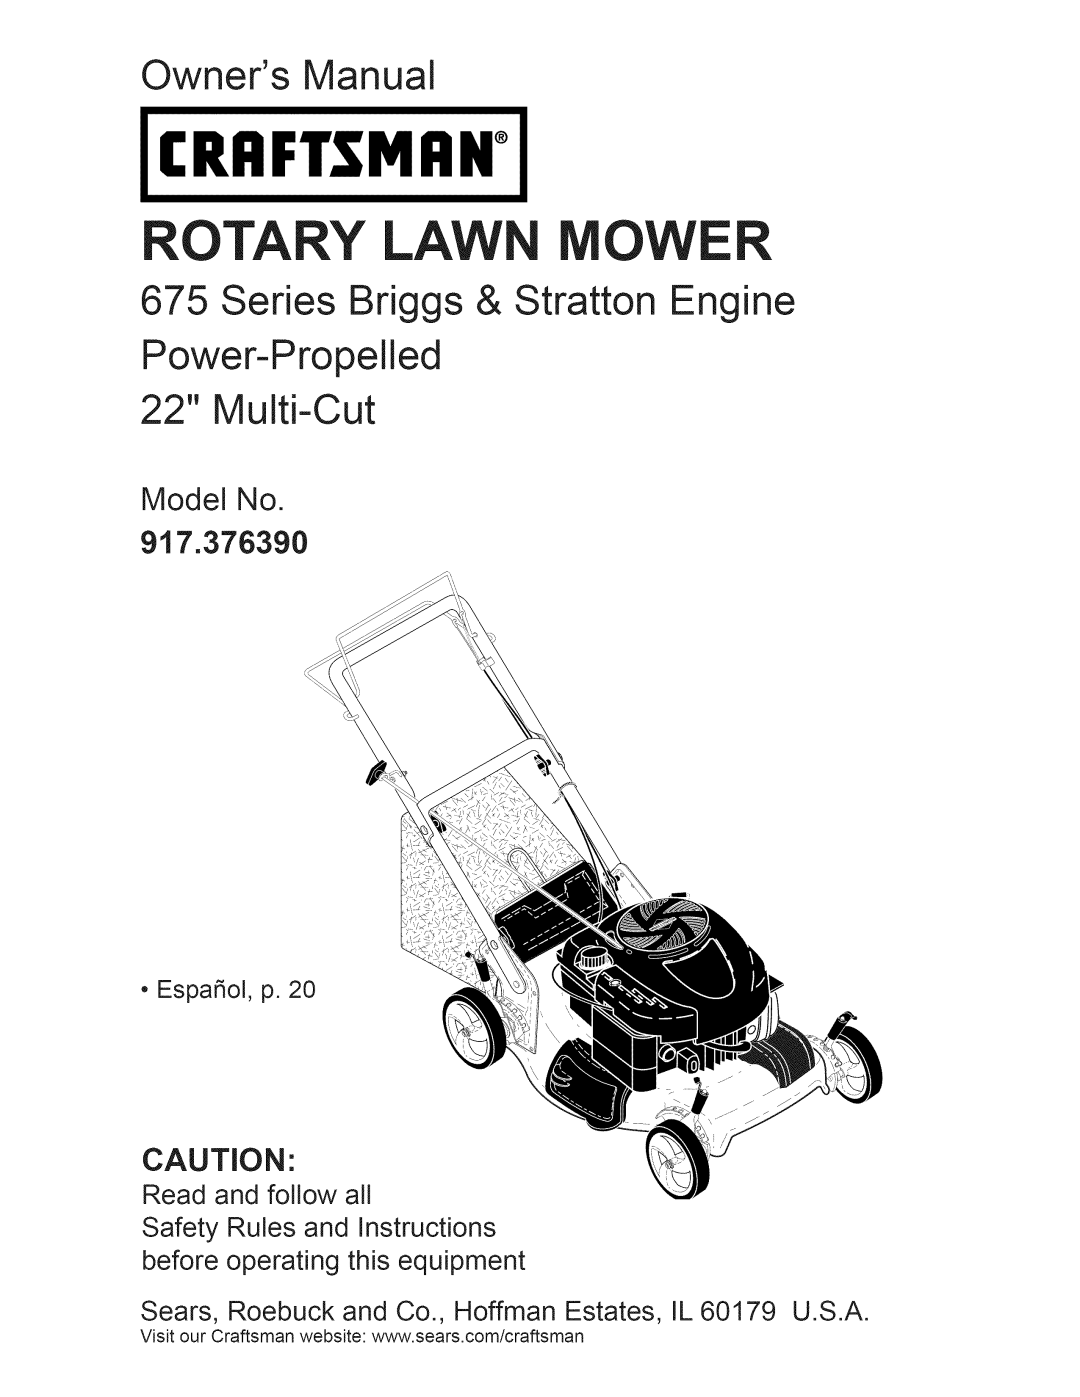 Craftsman manual Model No 917.376390, Craftsman, Rotary Lawn Mower, Series Briggs & Stratton Engine 